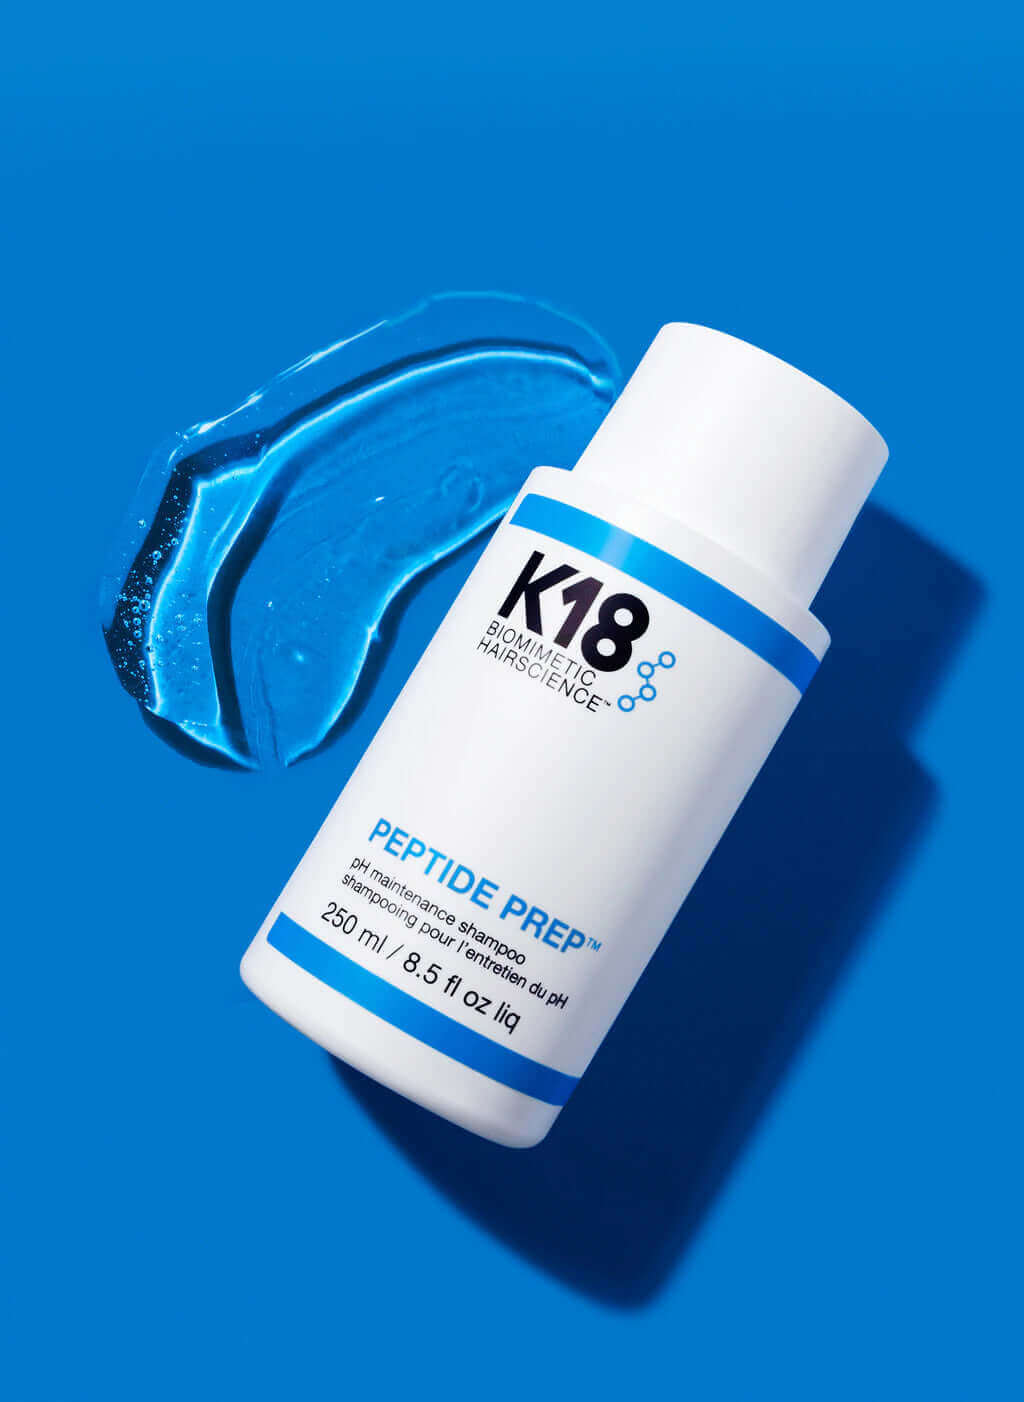 A bottle of K18 PEPTIDE PREP pH Maintenance Shampoo by K18 Hair Repair face mask.